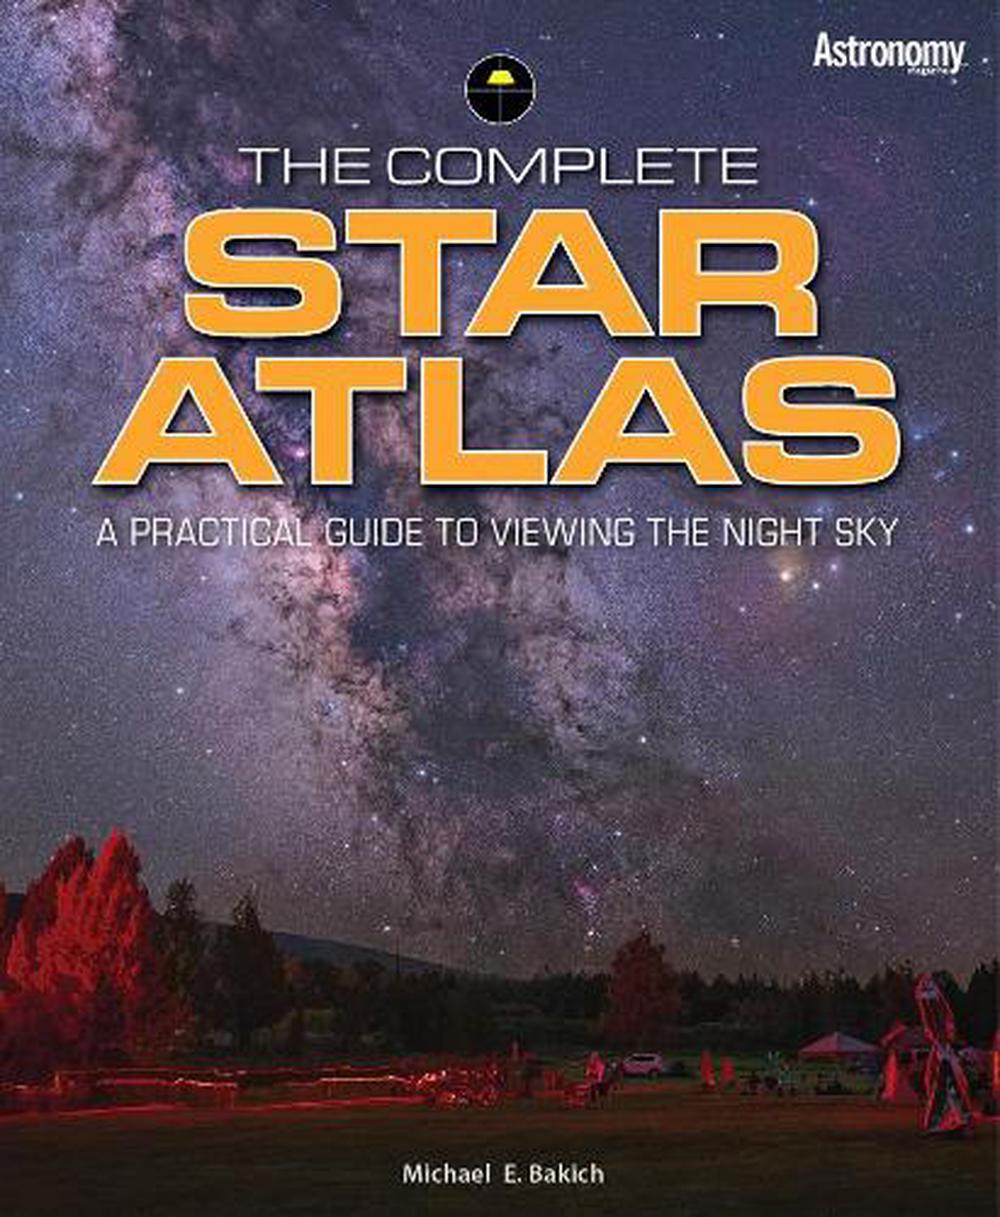 Star Atlas downloading